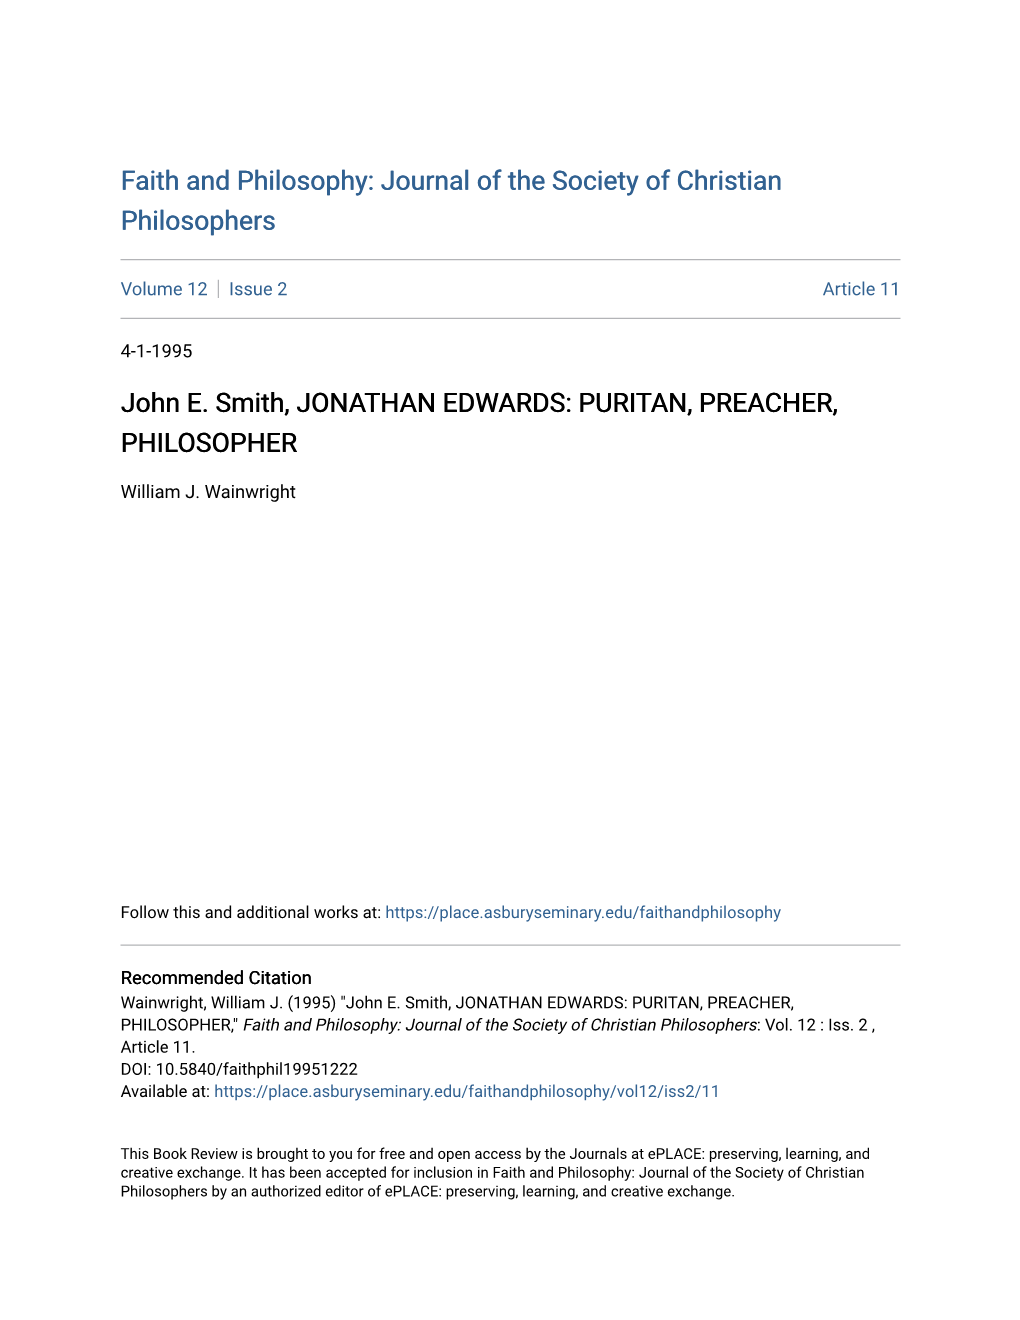 John E. Smith, JONATHAN EDWARDS: PURITAN, PREACHER, PHILOSOPHER